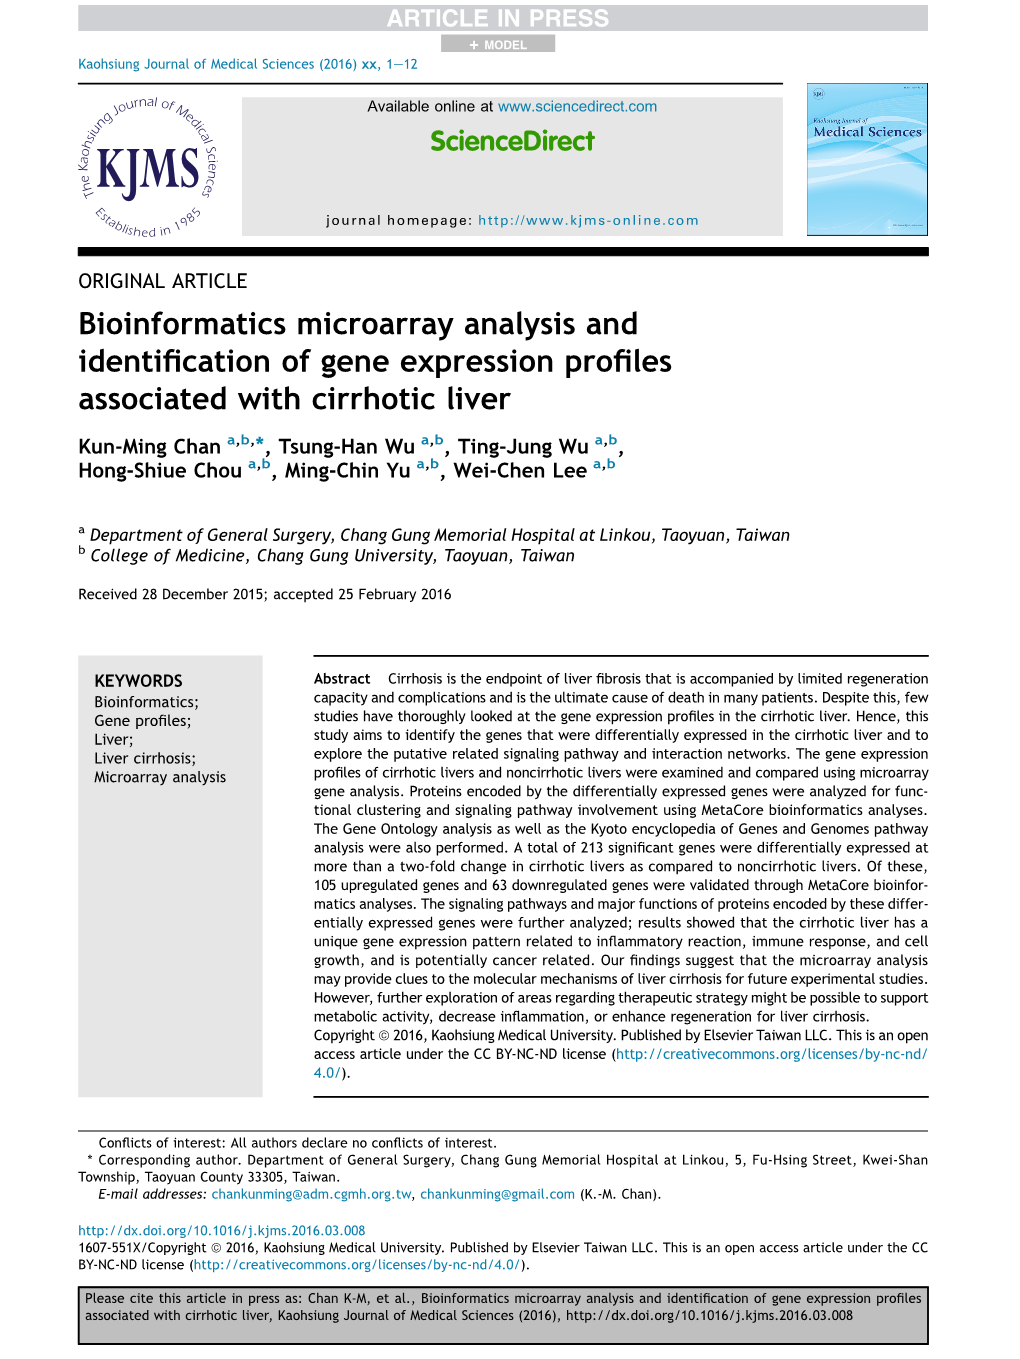 Bioinformatics Microarray Analysis and Identification of Gene